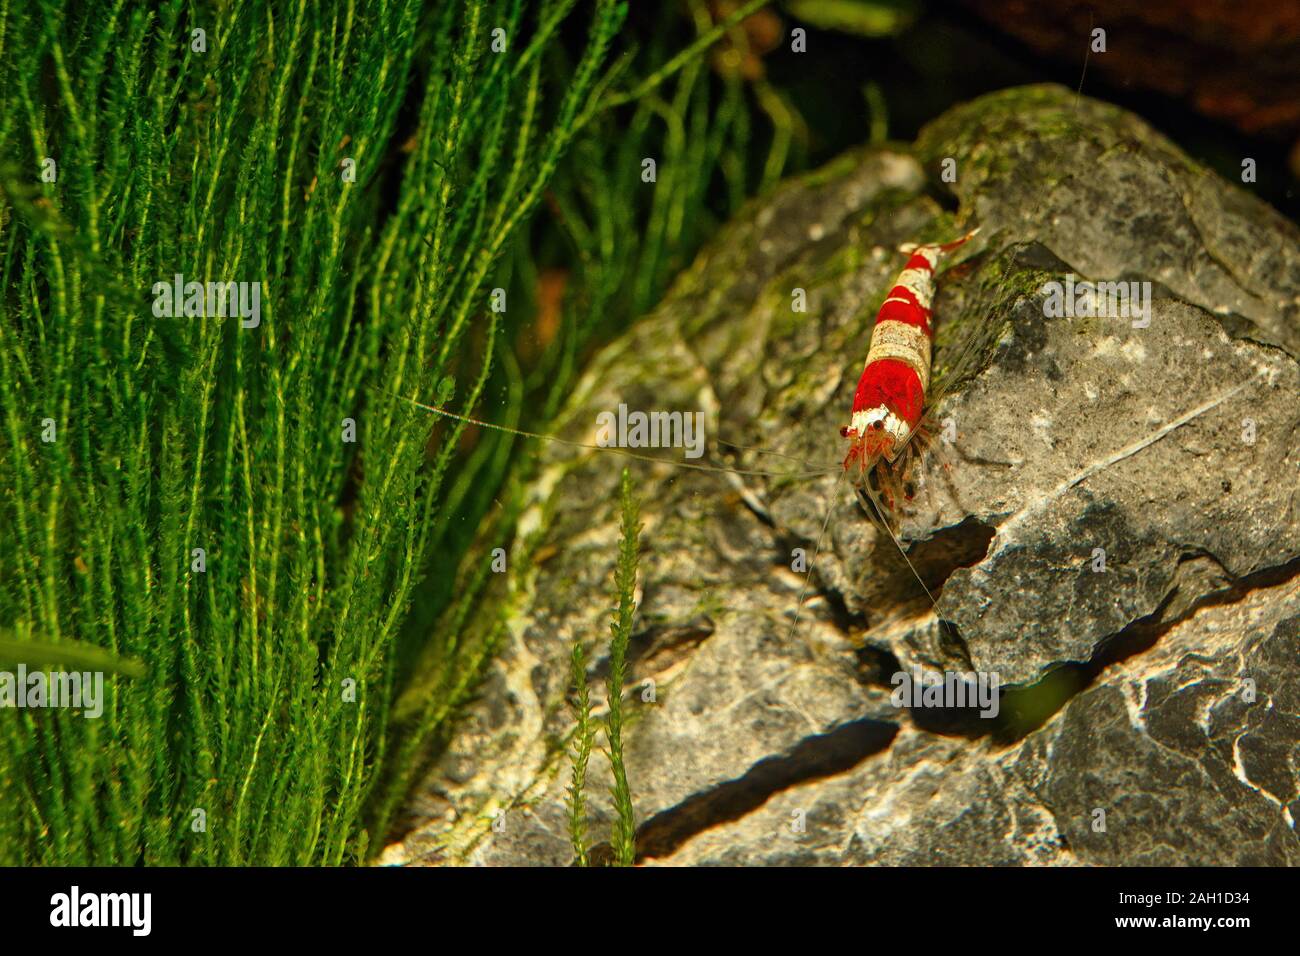 Red crystal shrimp (Caridina cantonensis) in freshwater aquarium Stock Photo